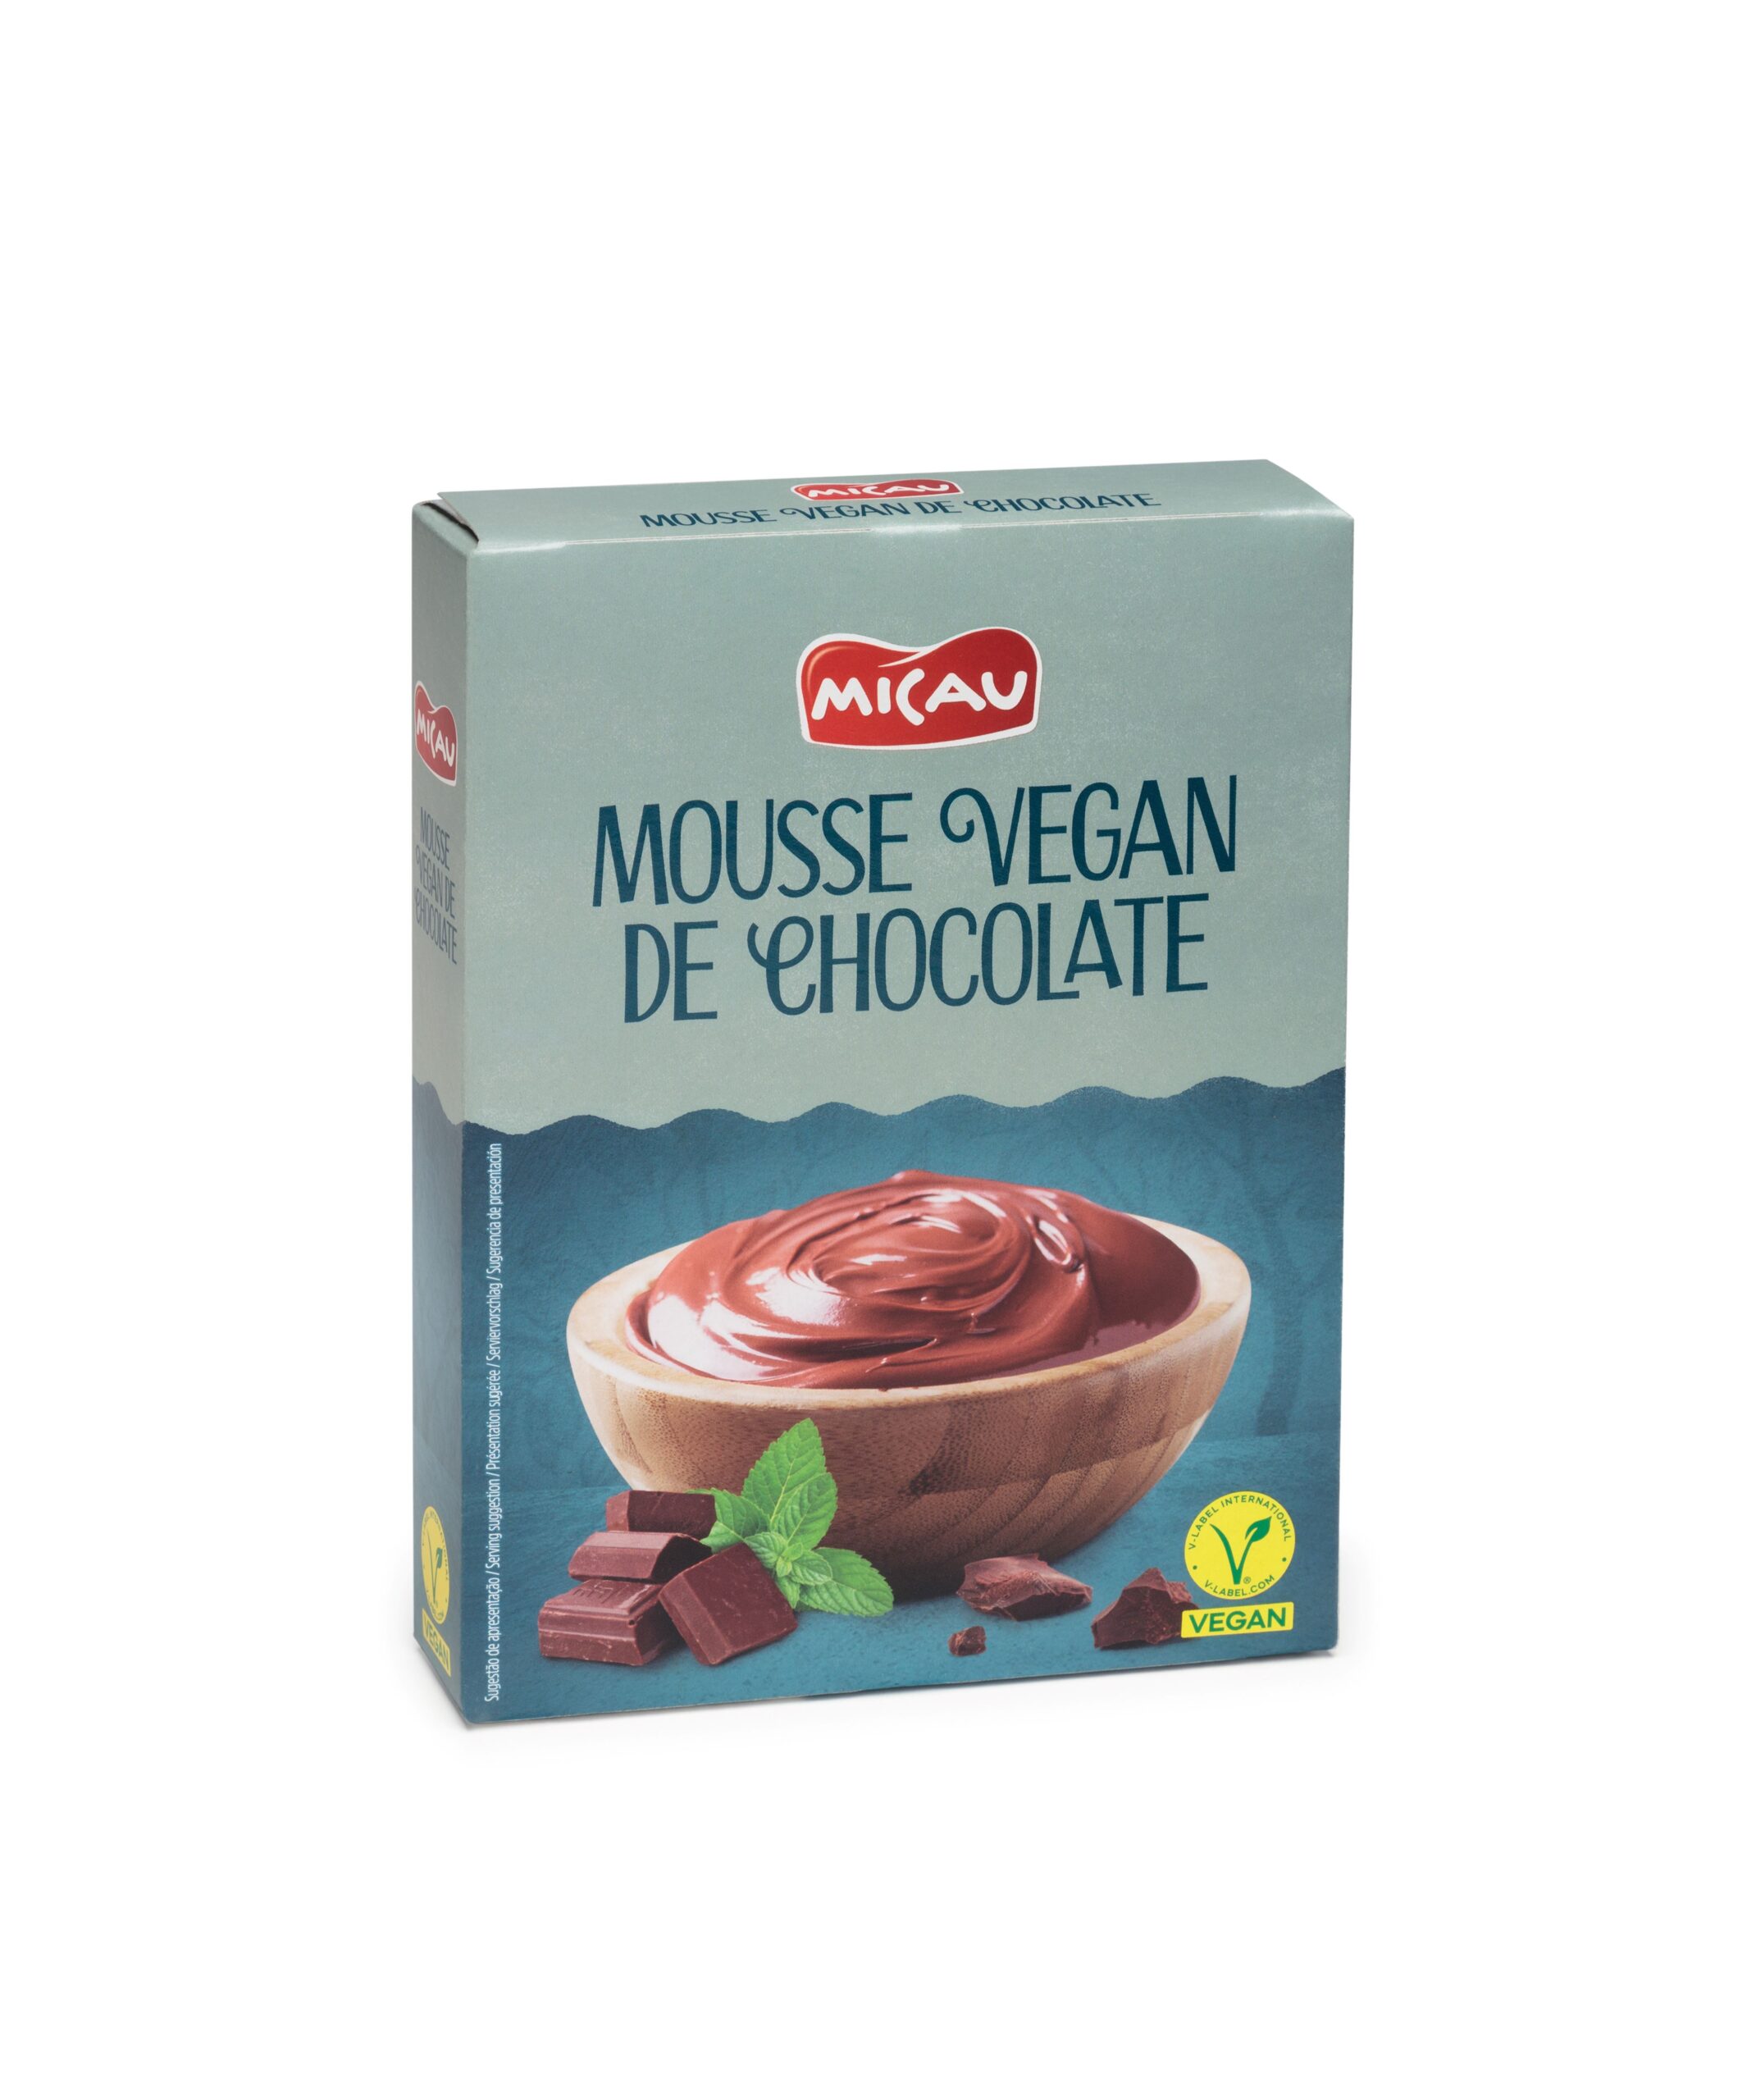 Mousse Vegan Chocolate NOVIDADES